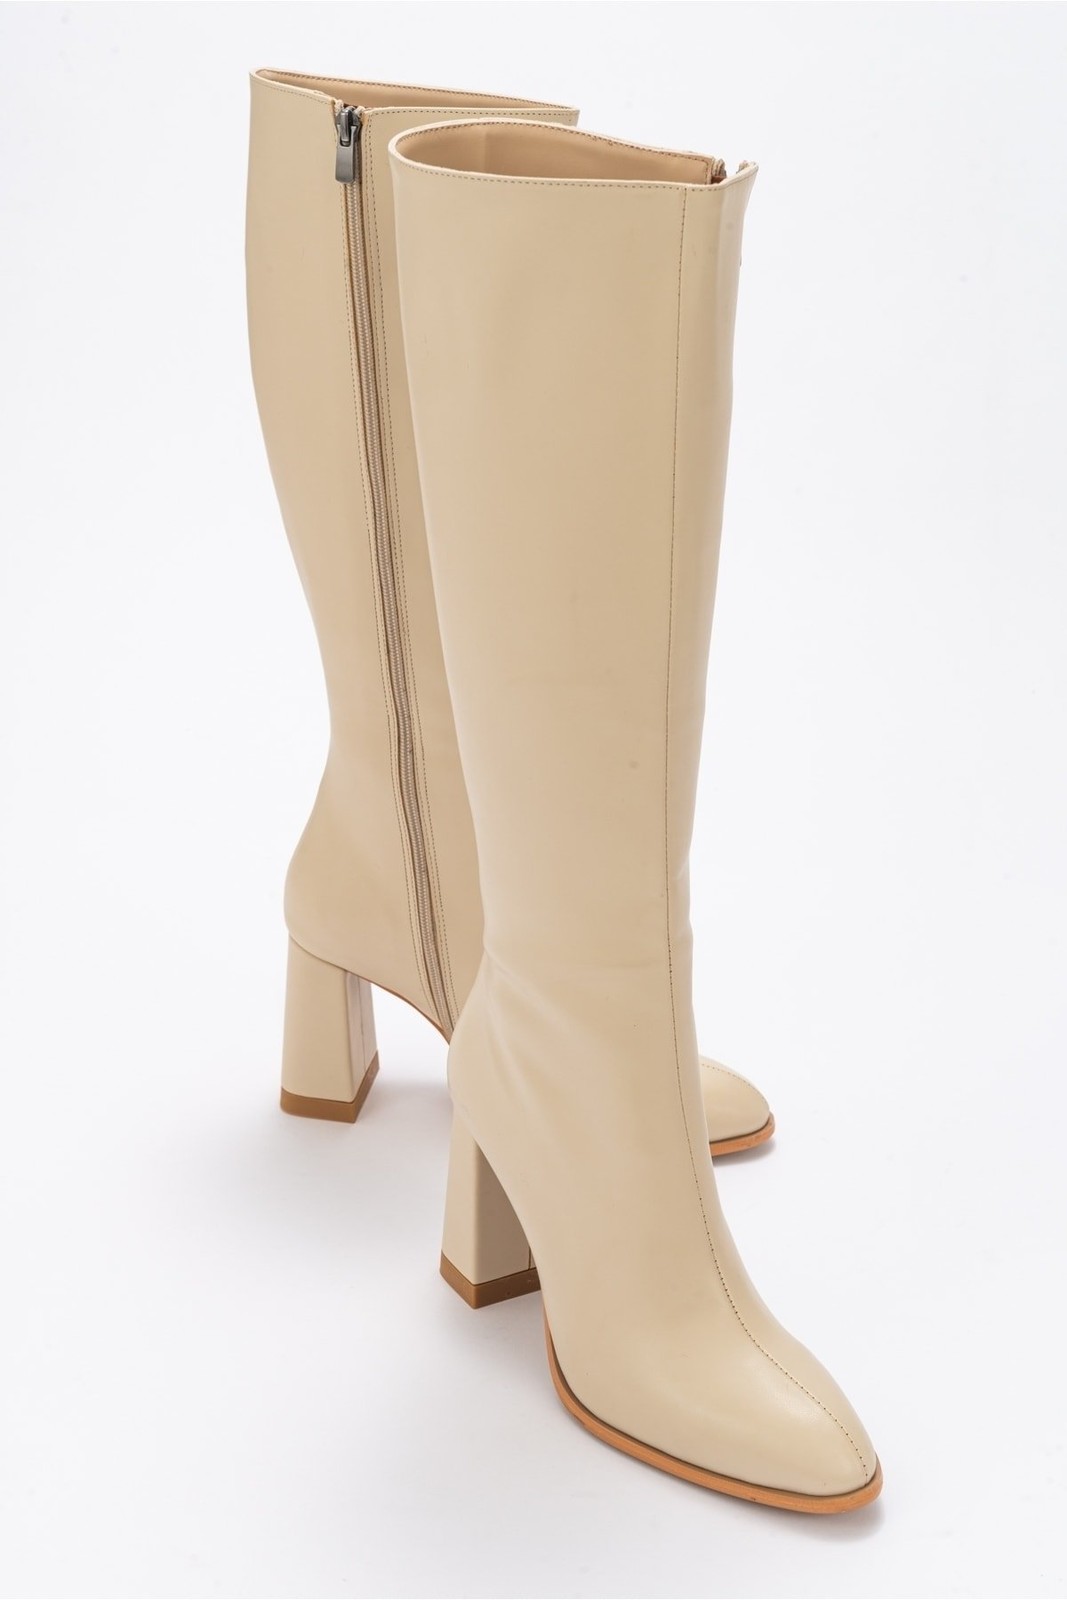 LuviShoes Decer Women's Beige Skin Heeled Boots